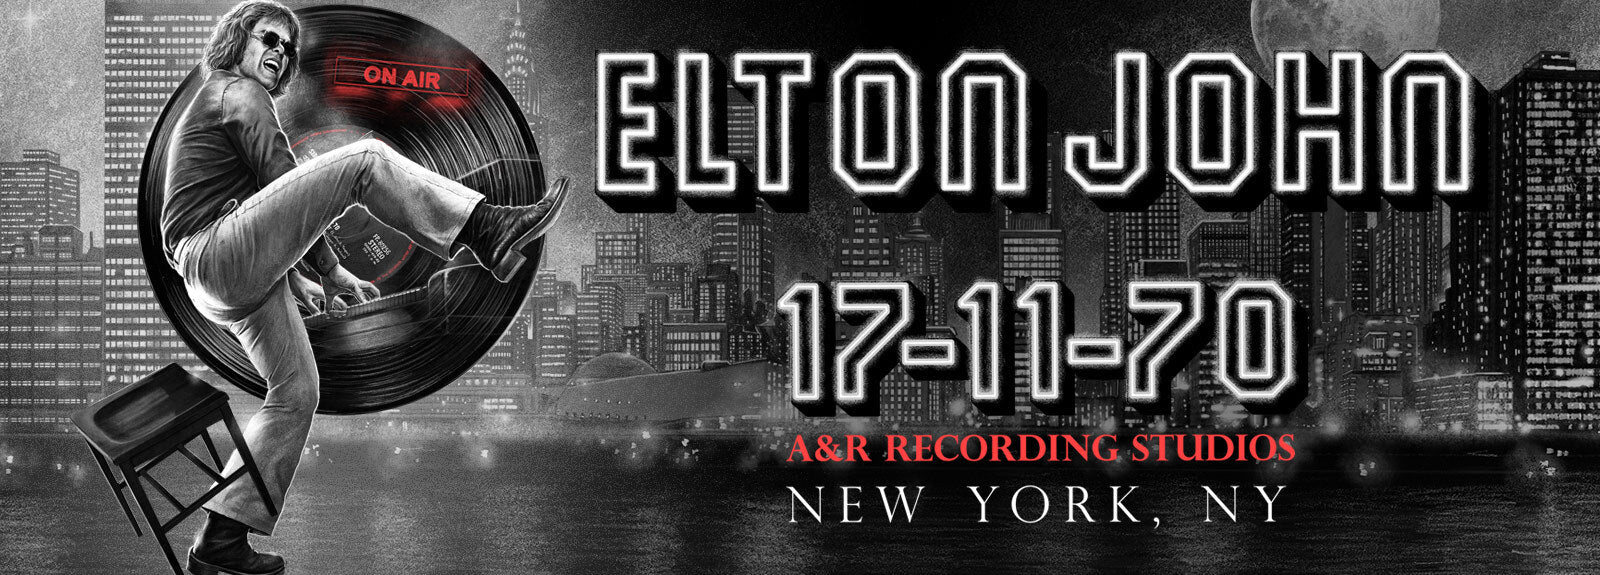 Elton John 17-11-70 50th Anniversary